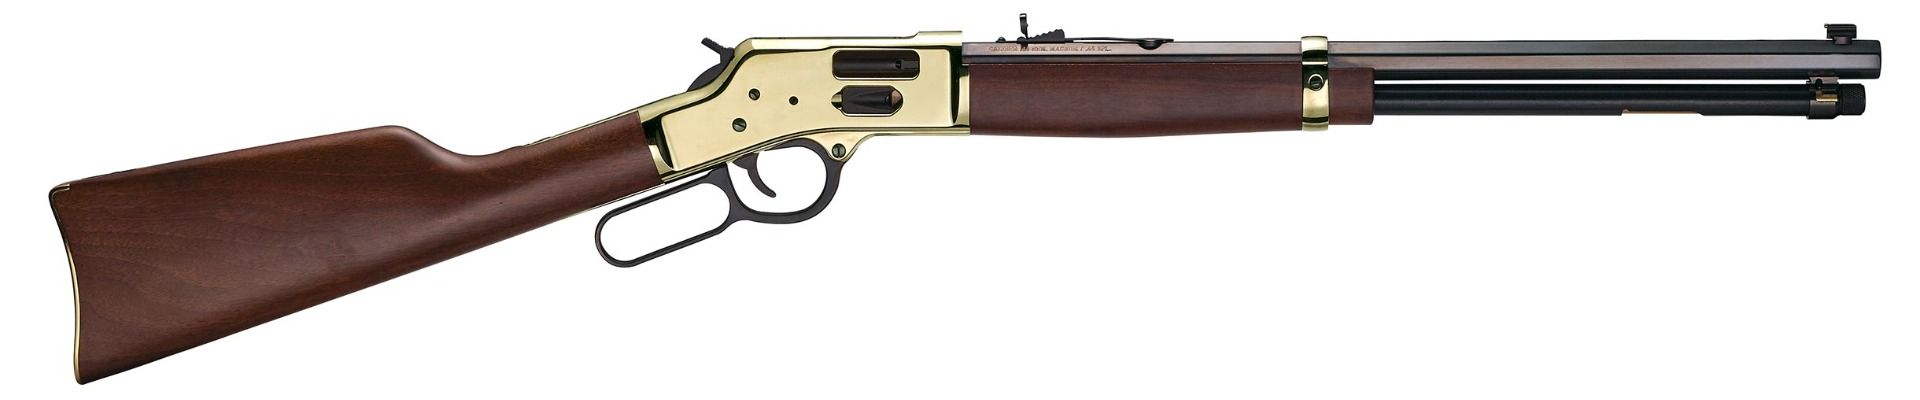 Buy Henry Big Boy Brass Rifle.45 Colt Online